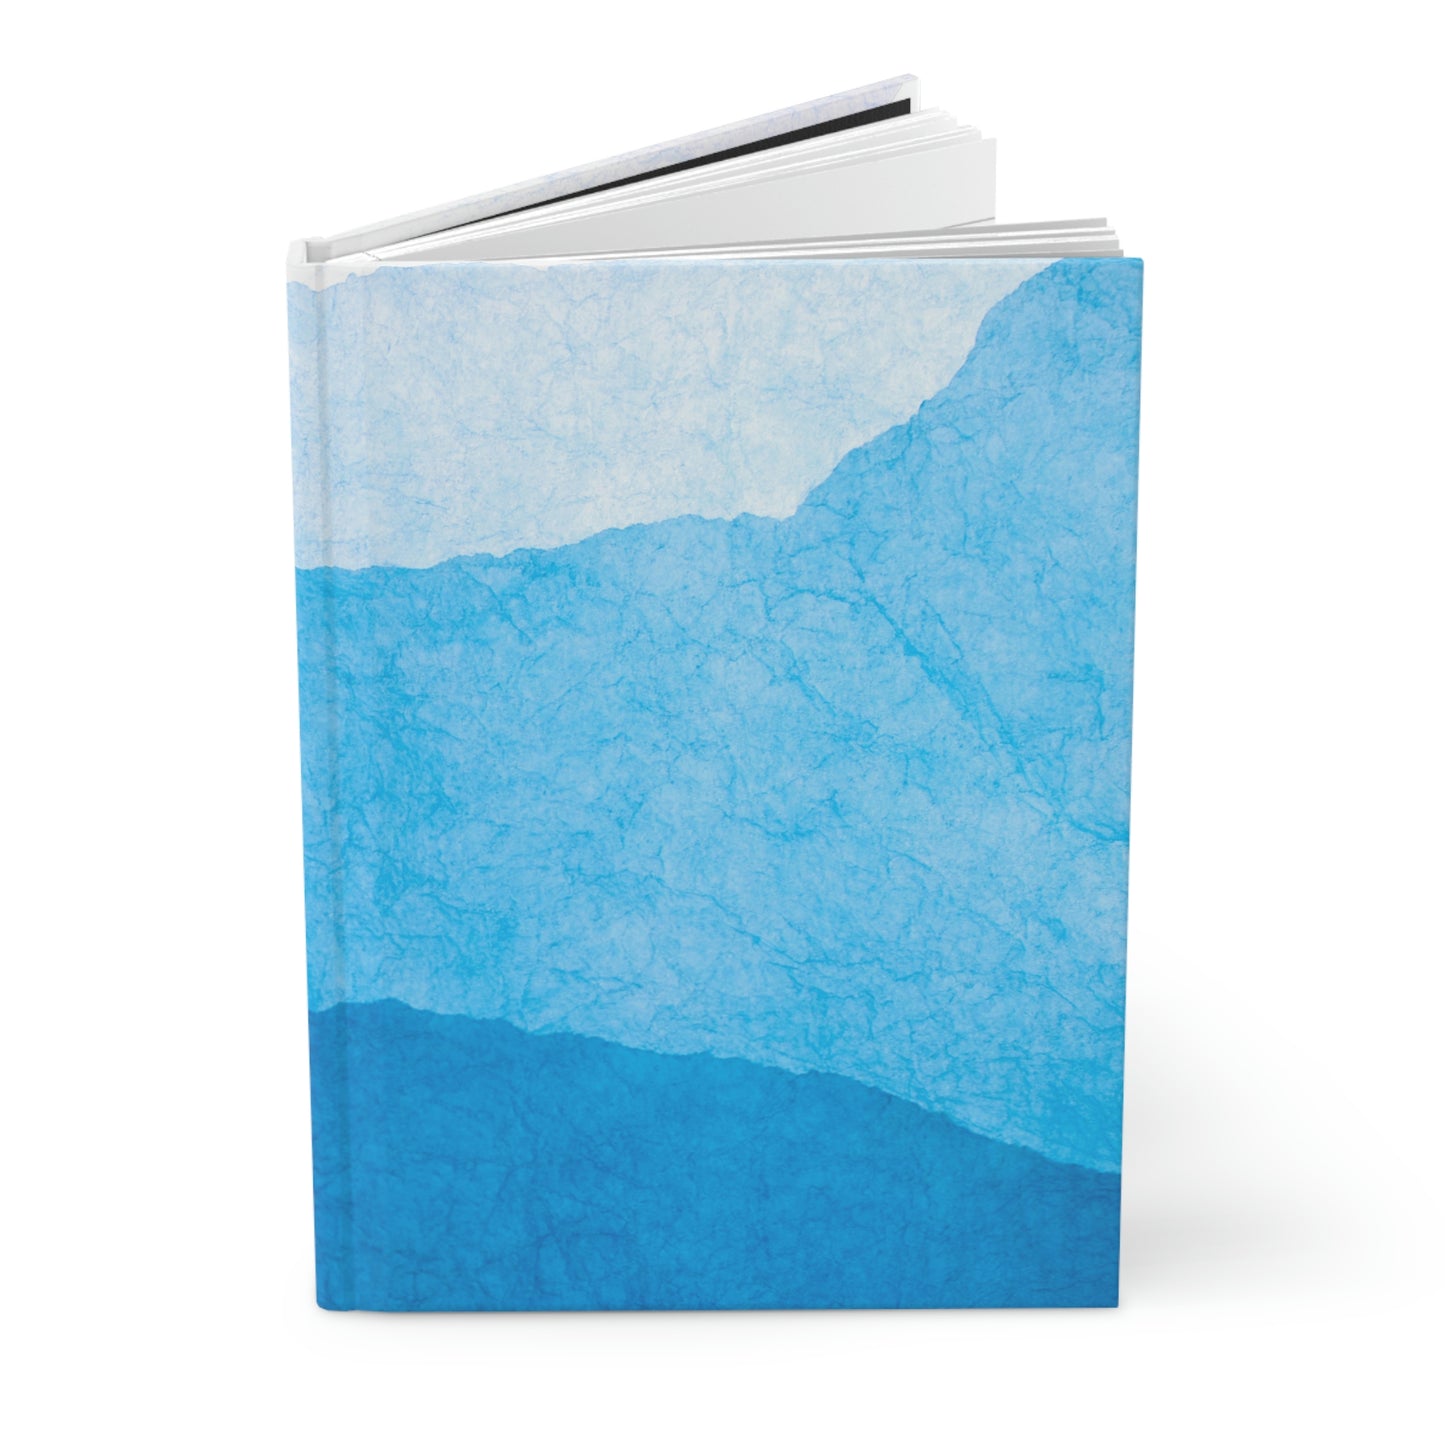 Blue Mountains Mystery Notebook Book Hardcover Journal Matte